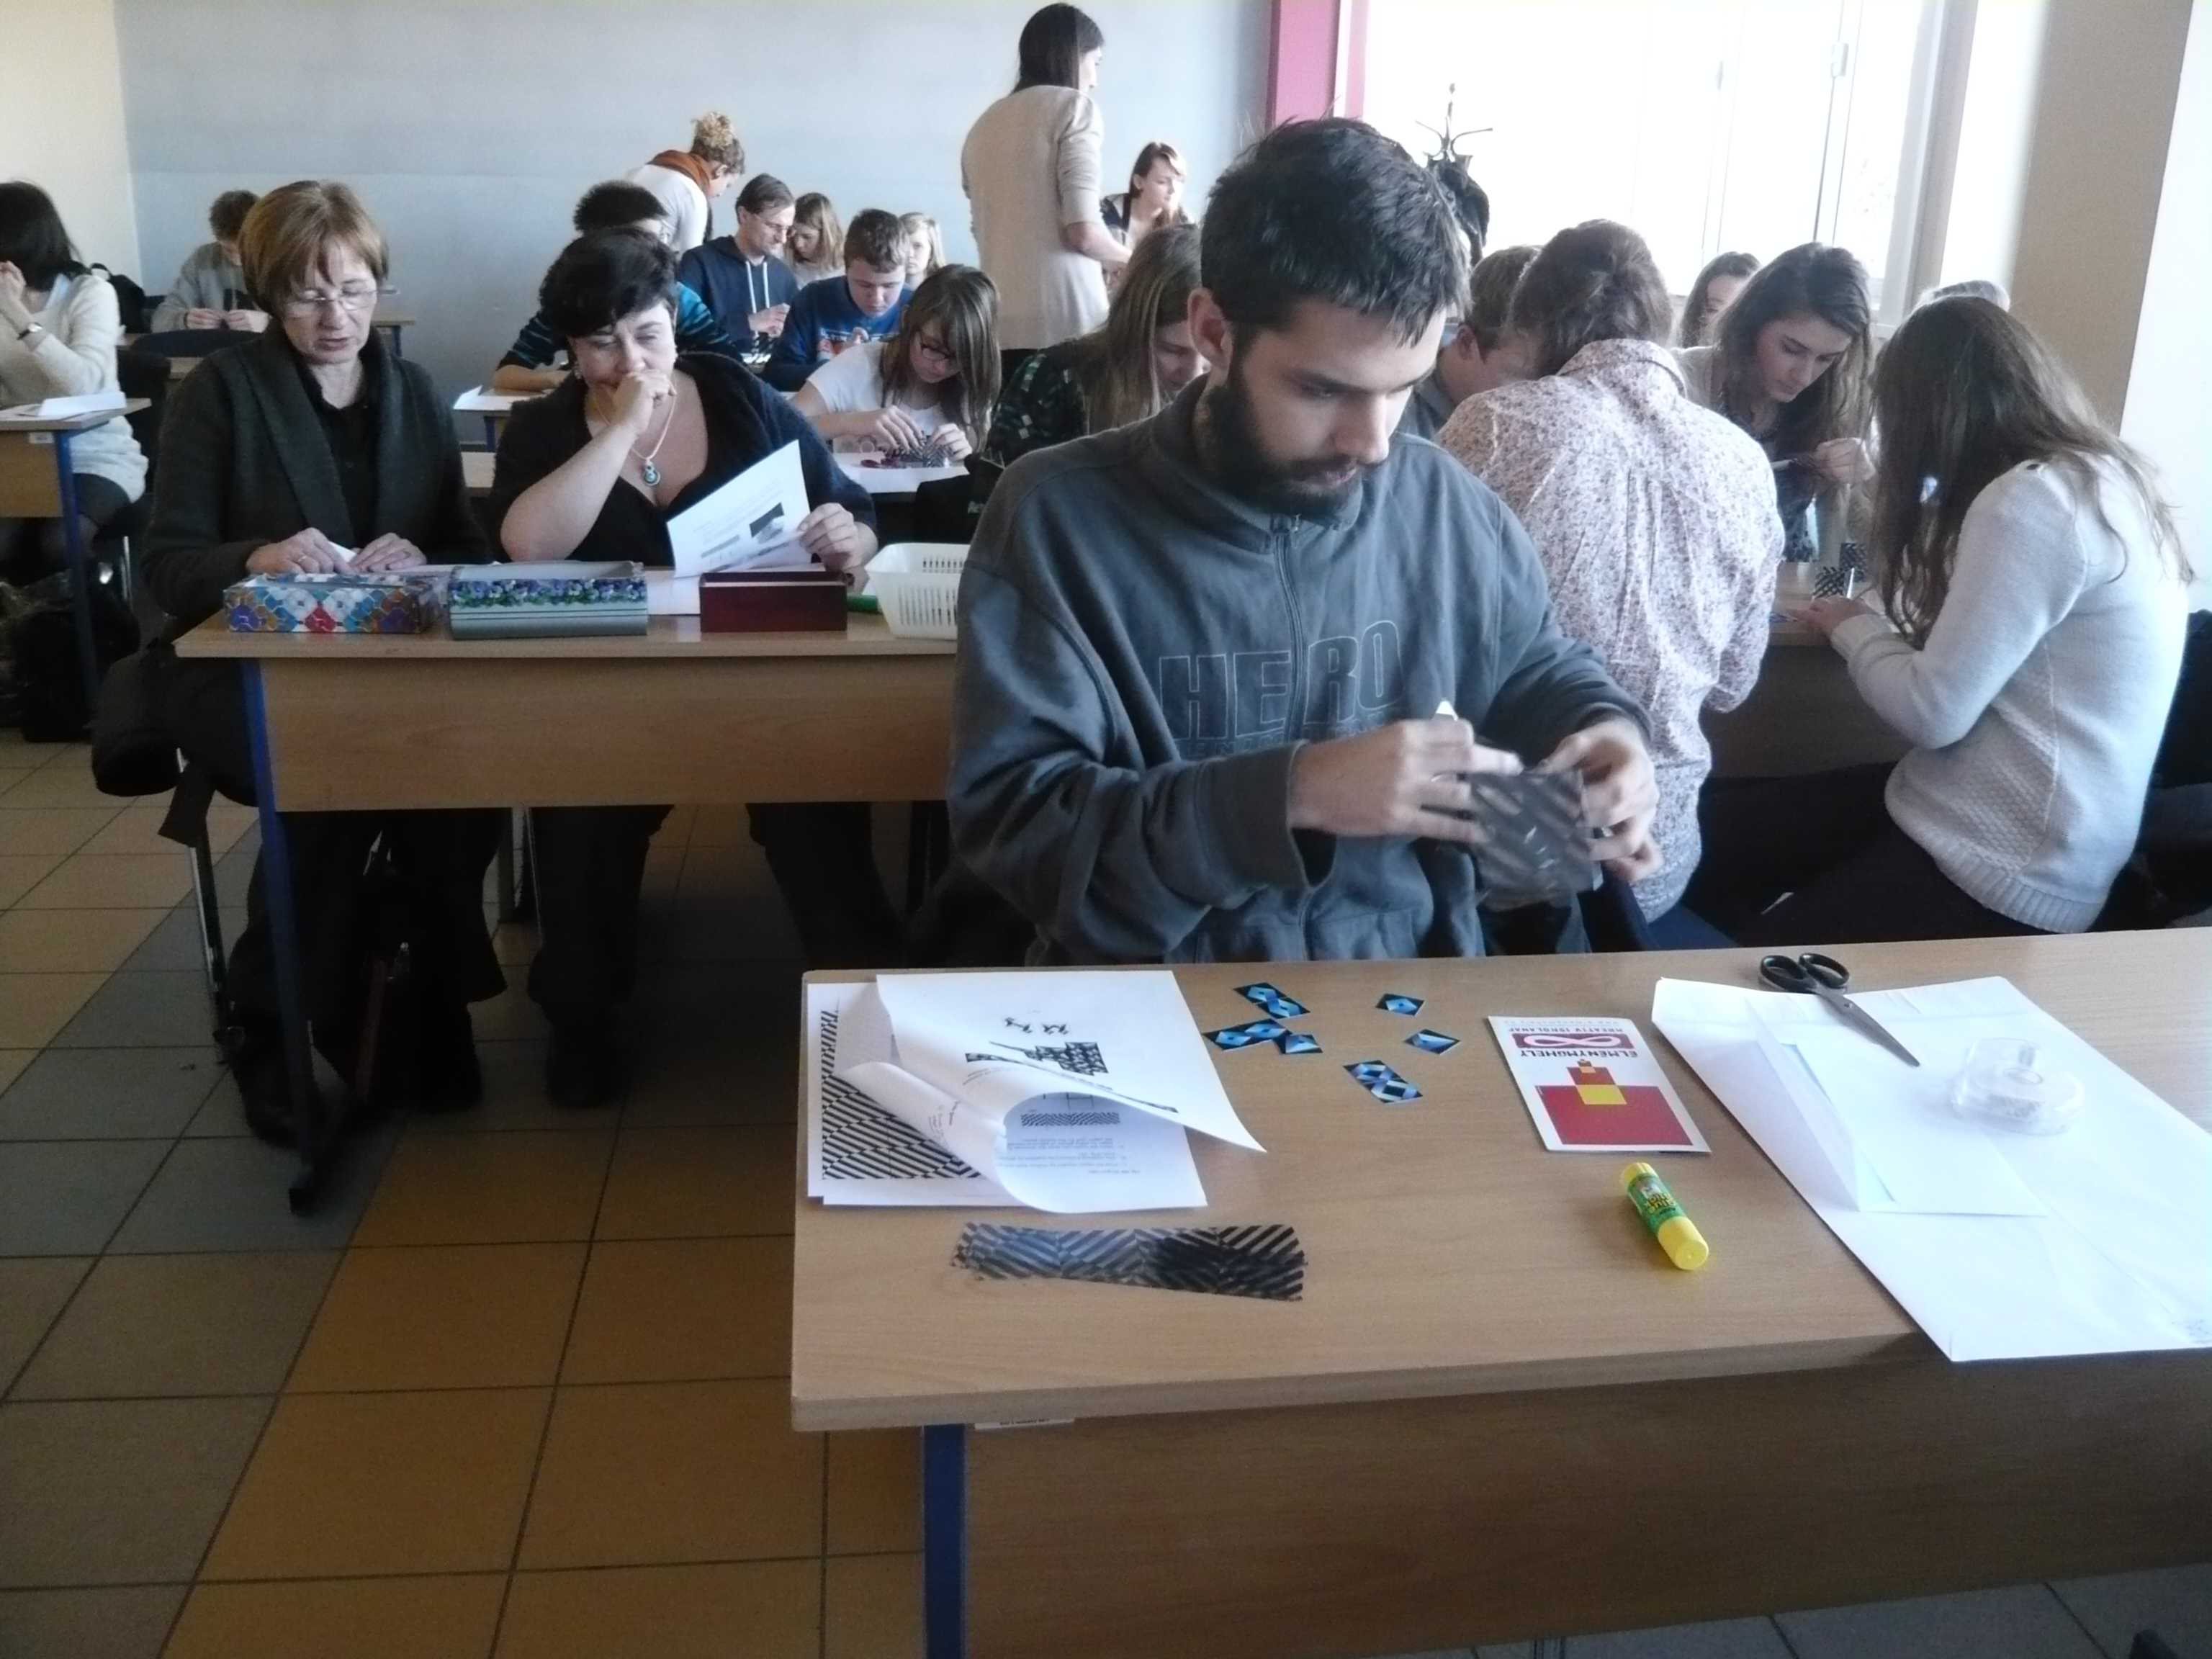 Polish students at Slavik Jablan's Visual mathematics workshop in Wroclaw